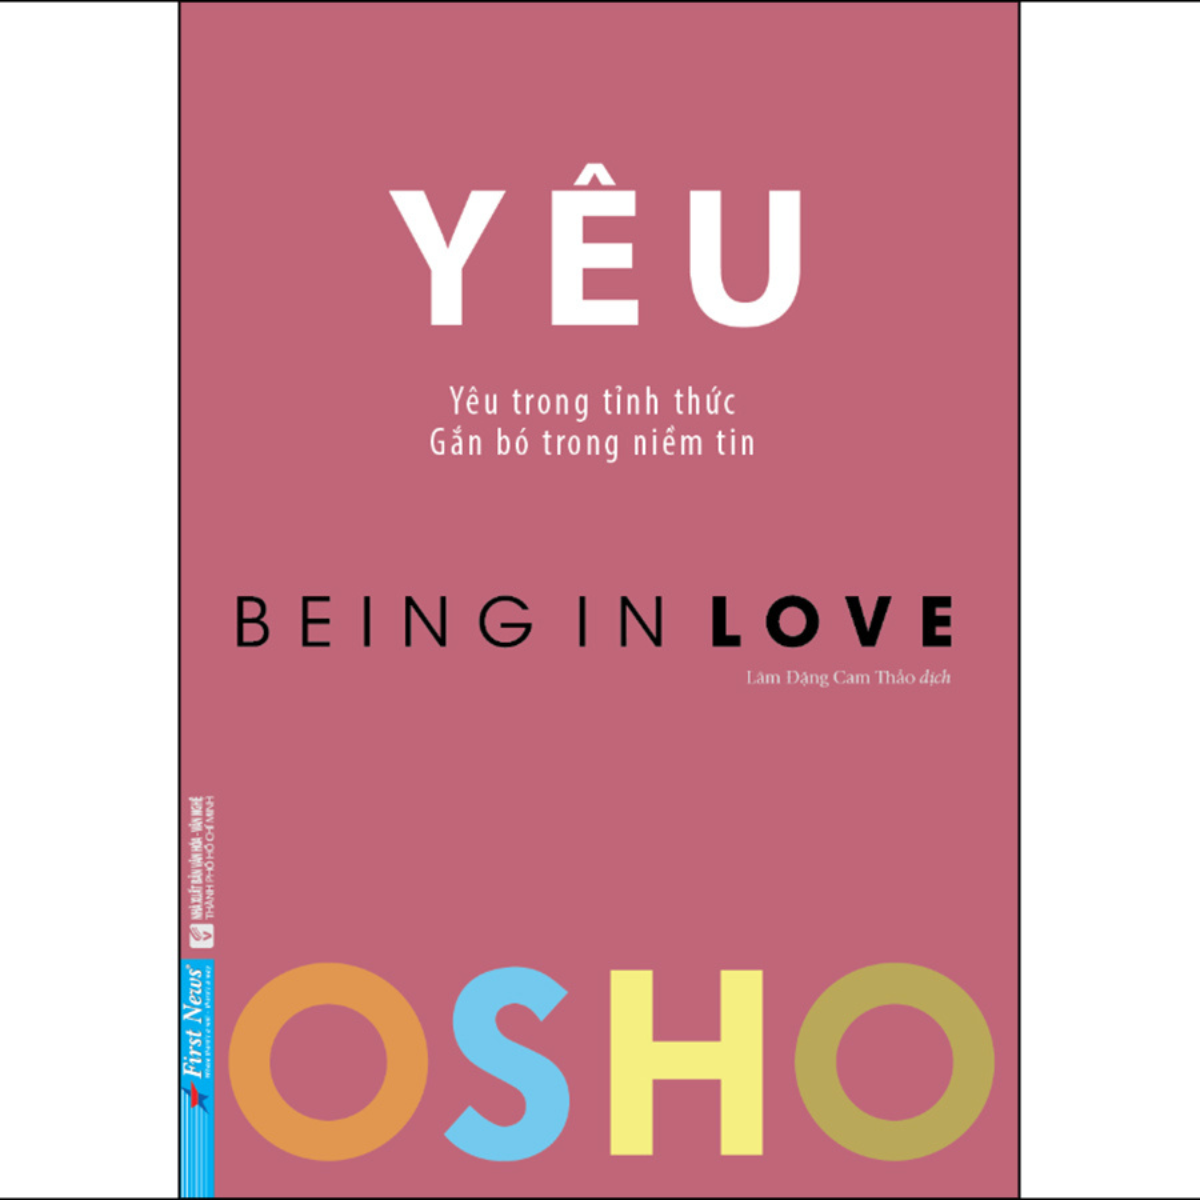 Sách Osho - Yêu Being In Love FN